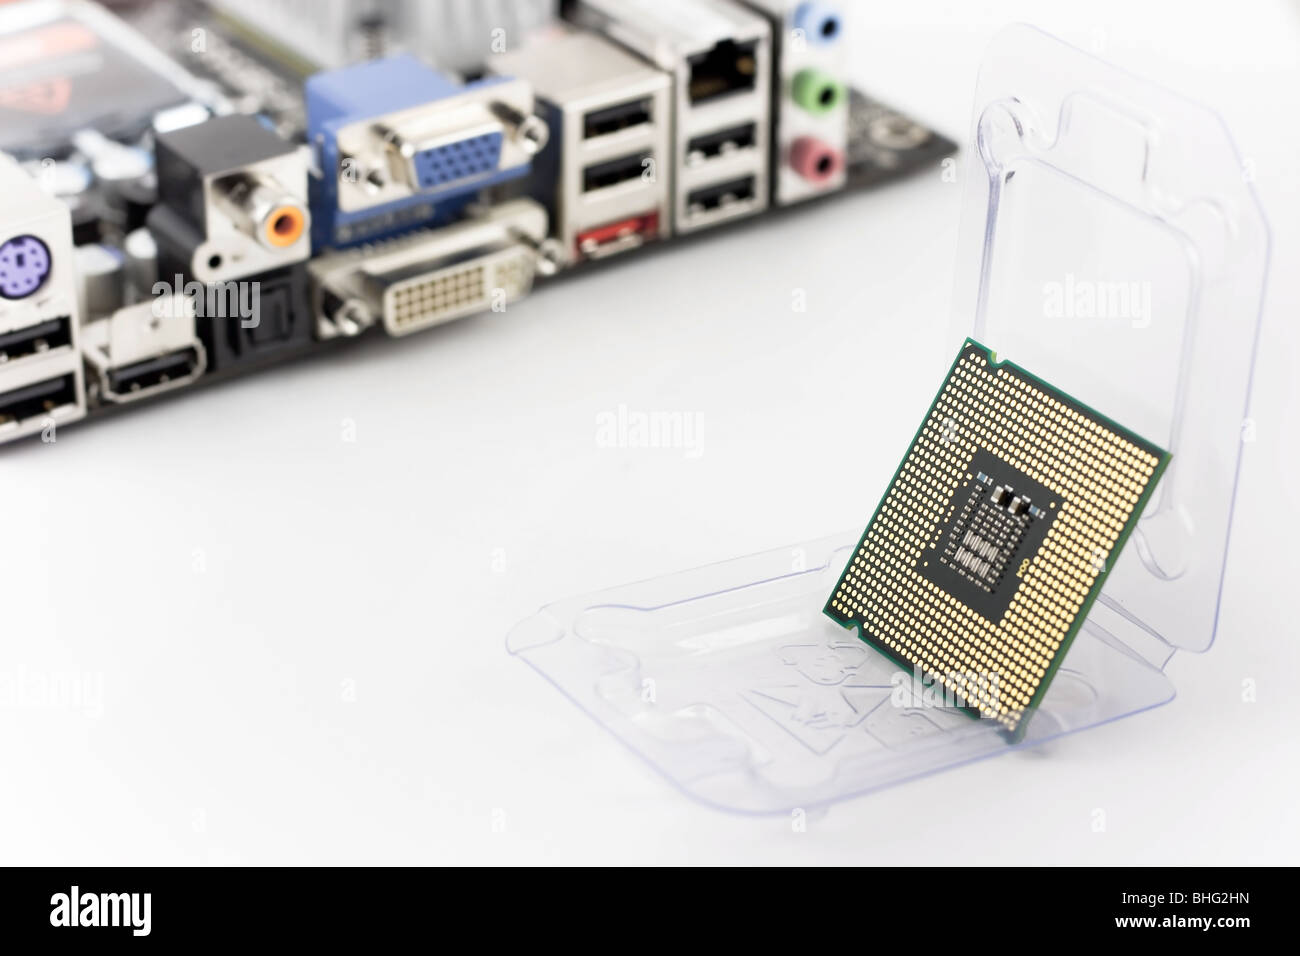 Computer processor, CPU for LGA 775 socket and motherboard Stock Photo